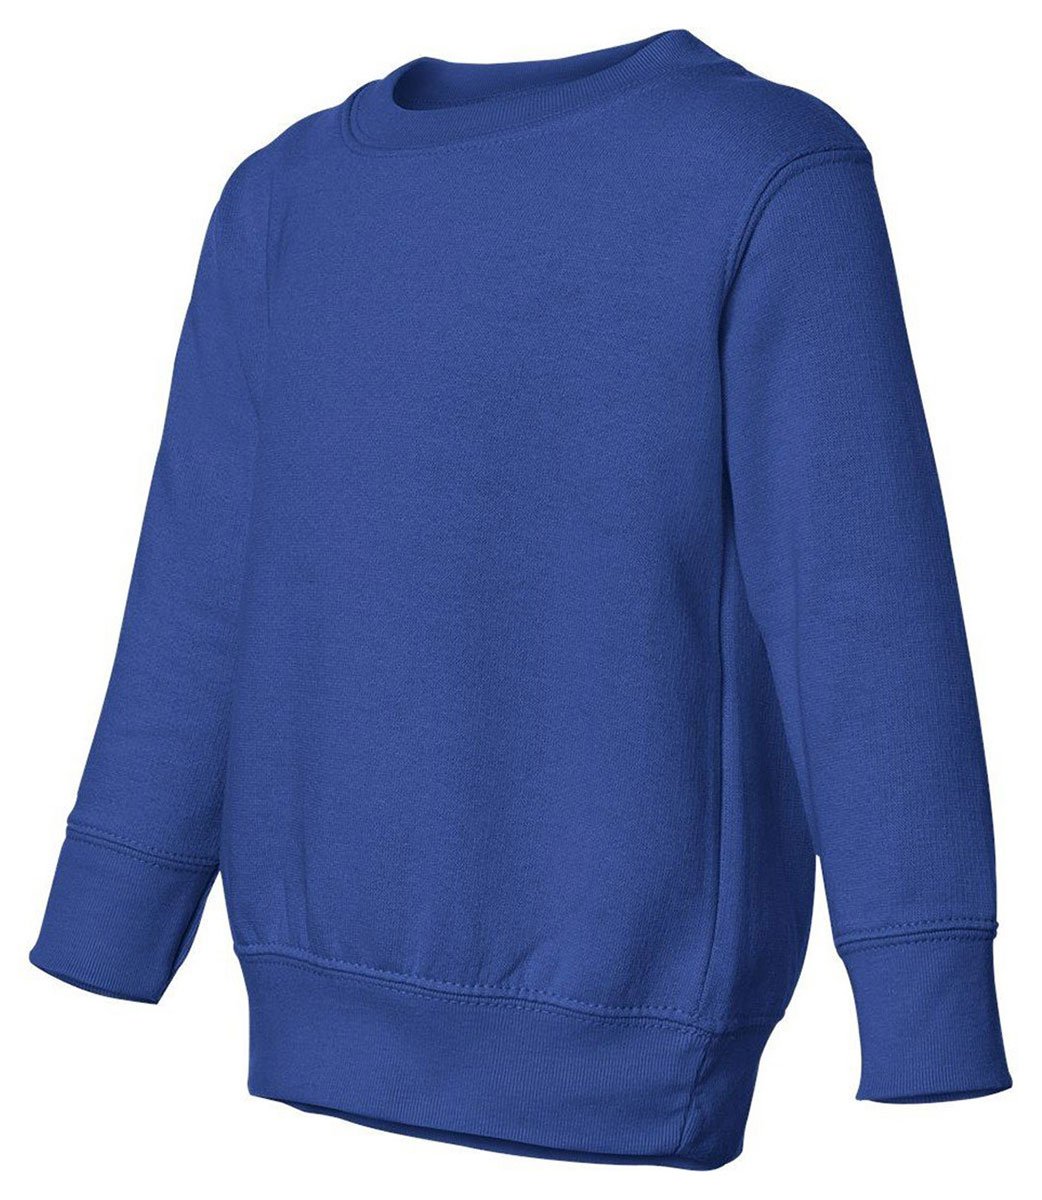 RABBIT SKINS Toddler Juvenile Blended Fleece Sweatshirt